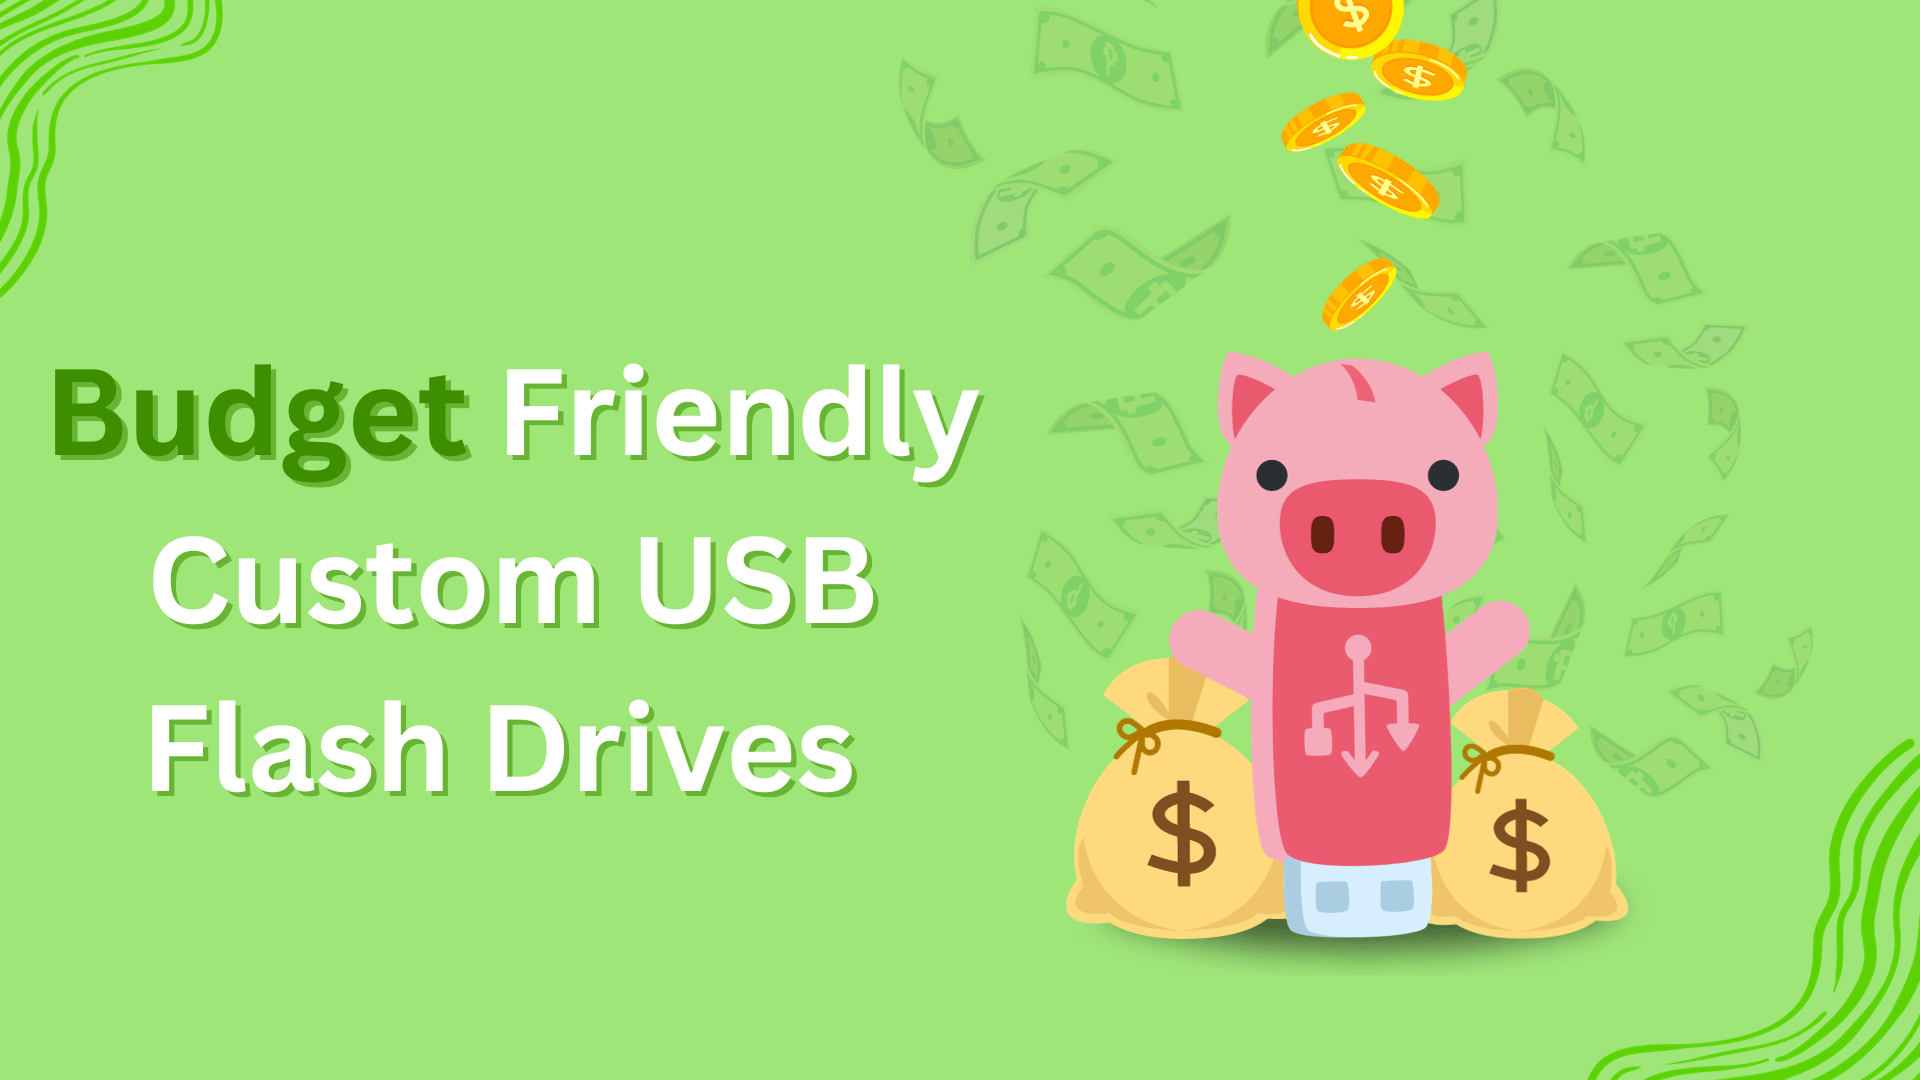 Budget Friendly USB flash drives